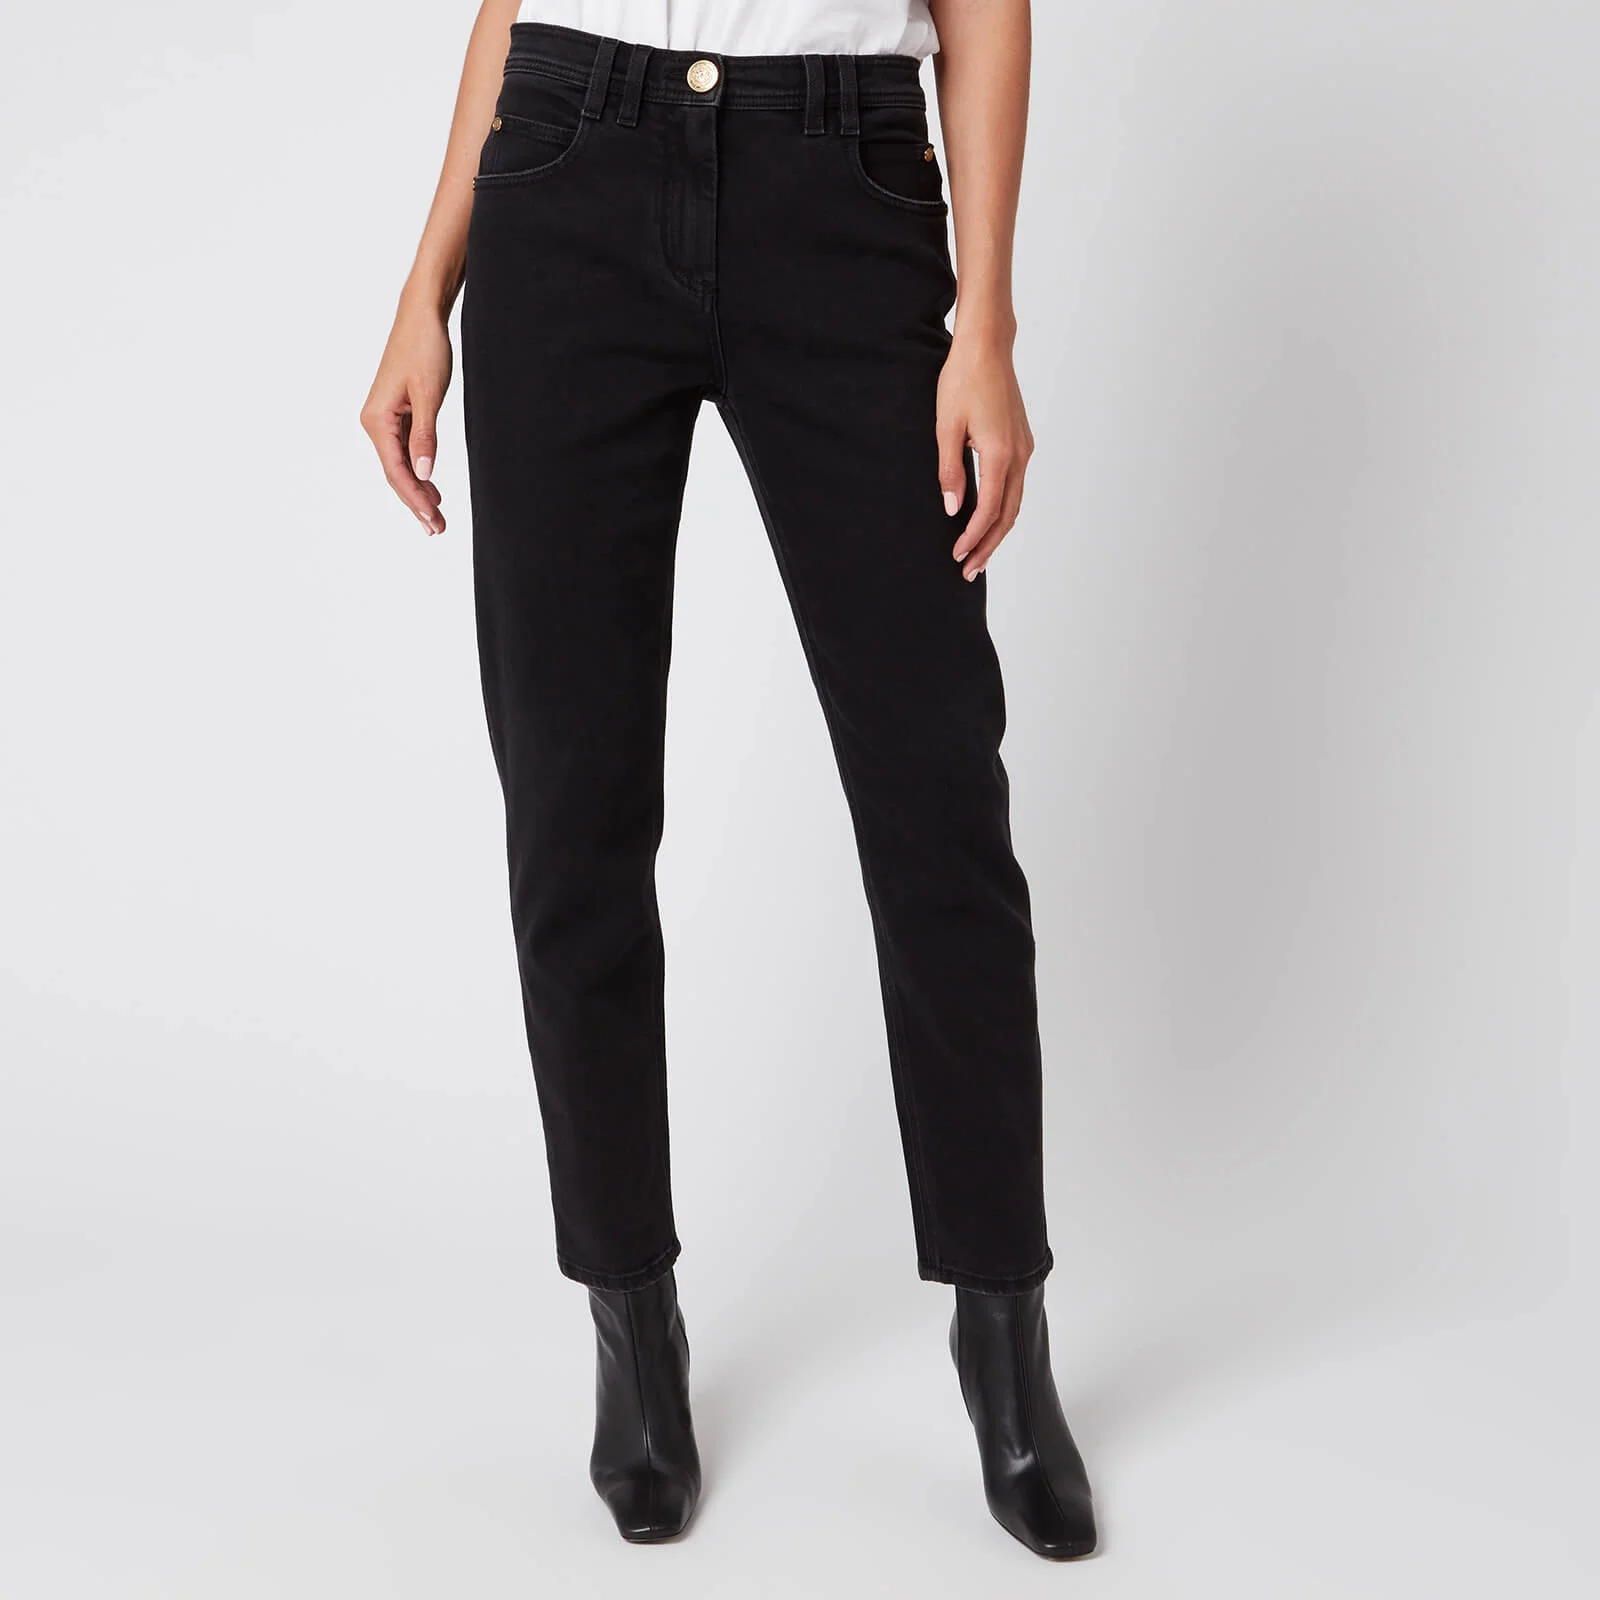 Balmain Women's Low-Rise Slim Jeans with Patch - Black Image 1